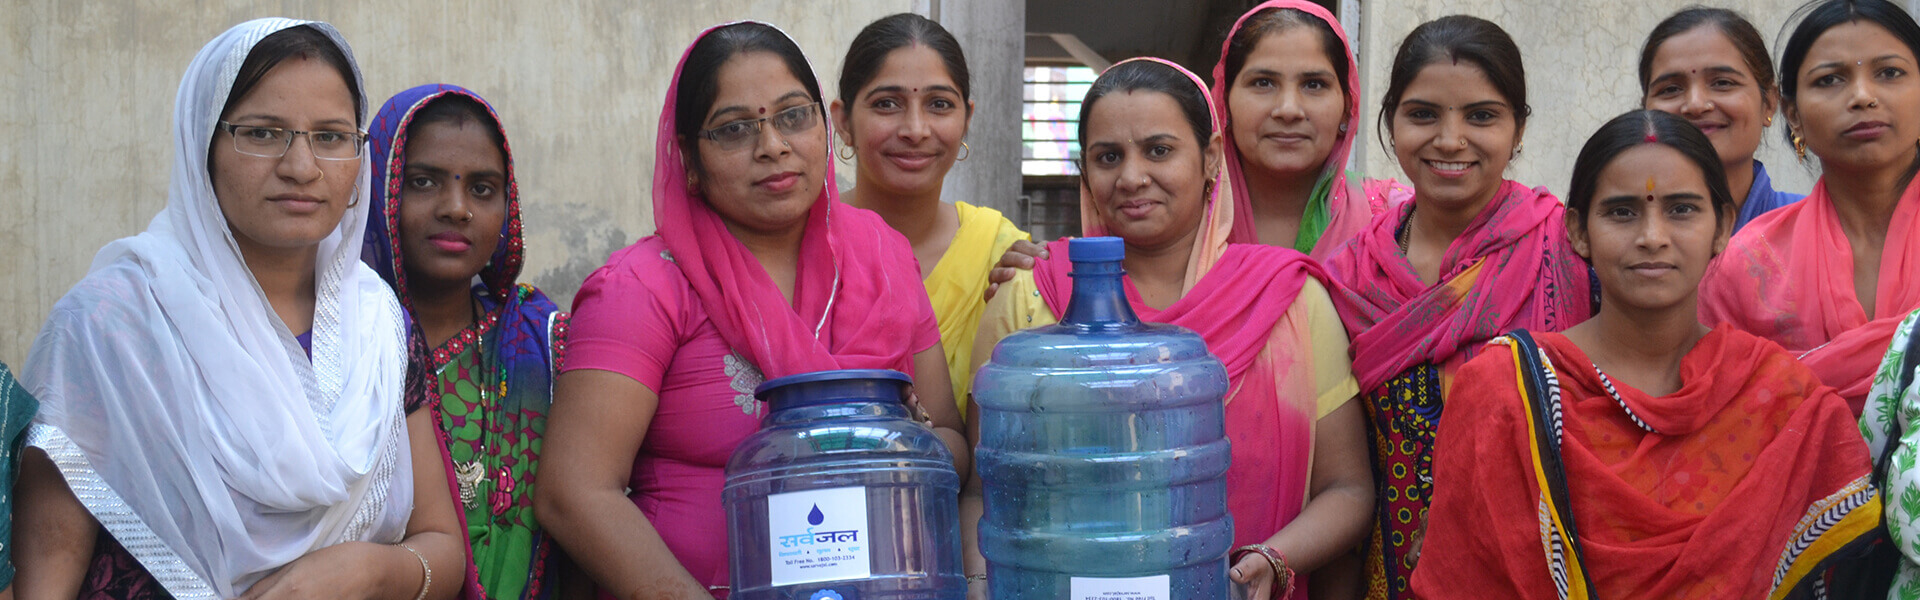 women-holding-sarvajal-water-jug